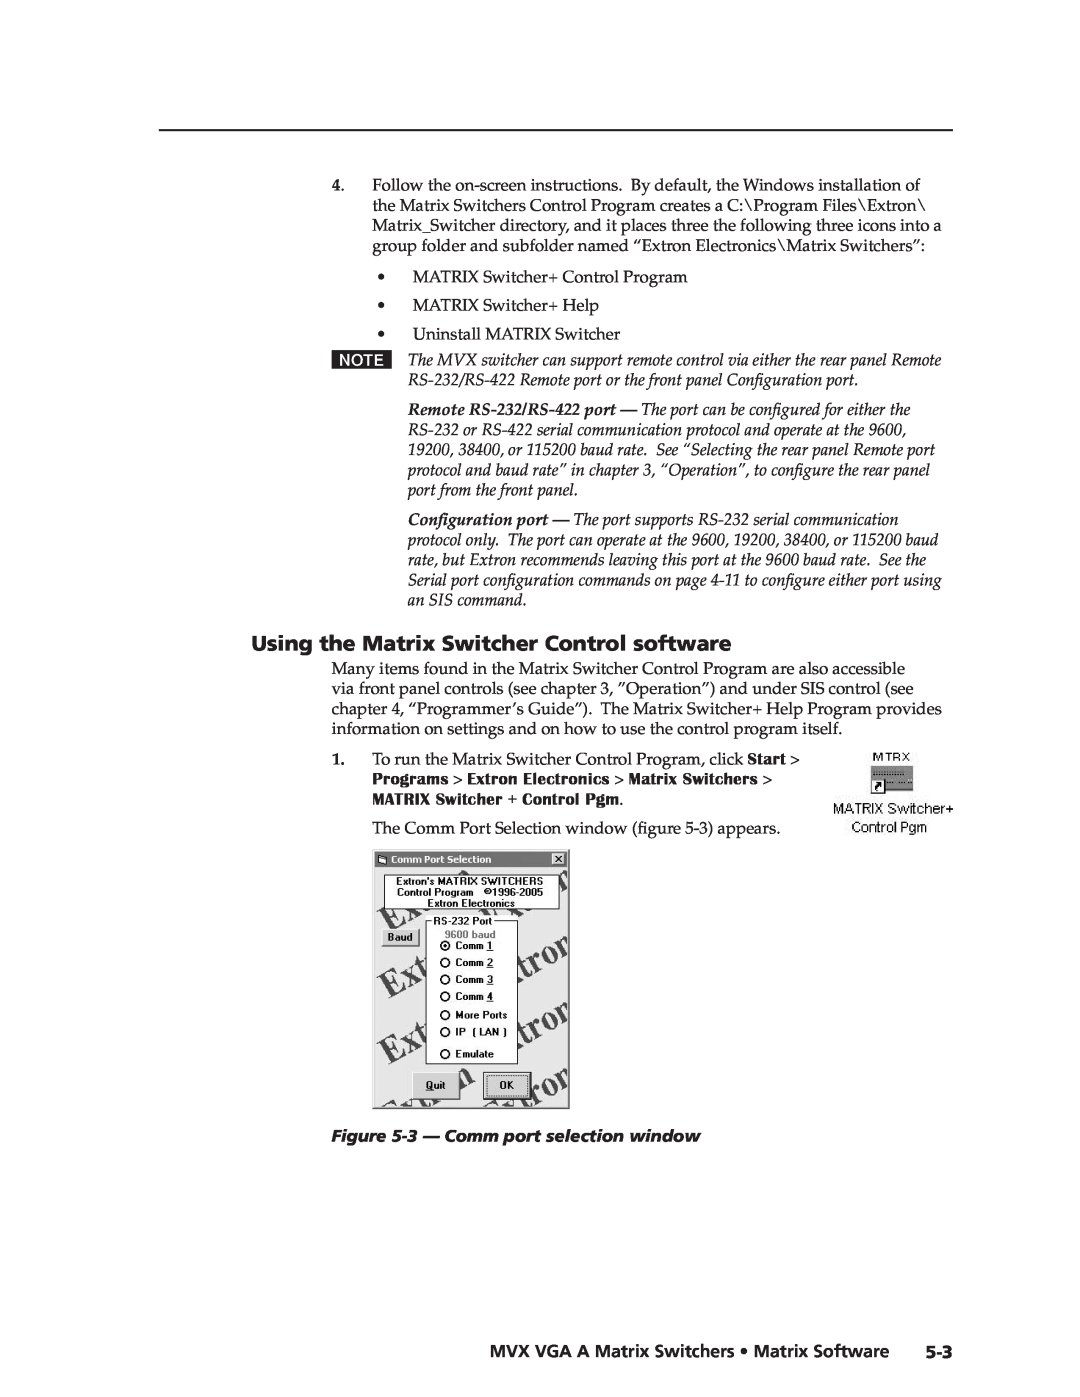 Extron electronic MVX VGA A manual Using the Matrix Switcher Control software, 3 - Comm port selection window, Preliminary 